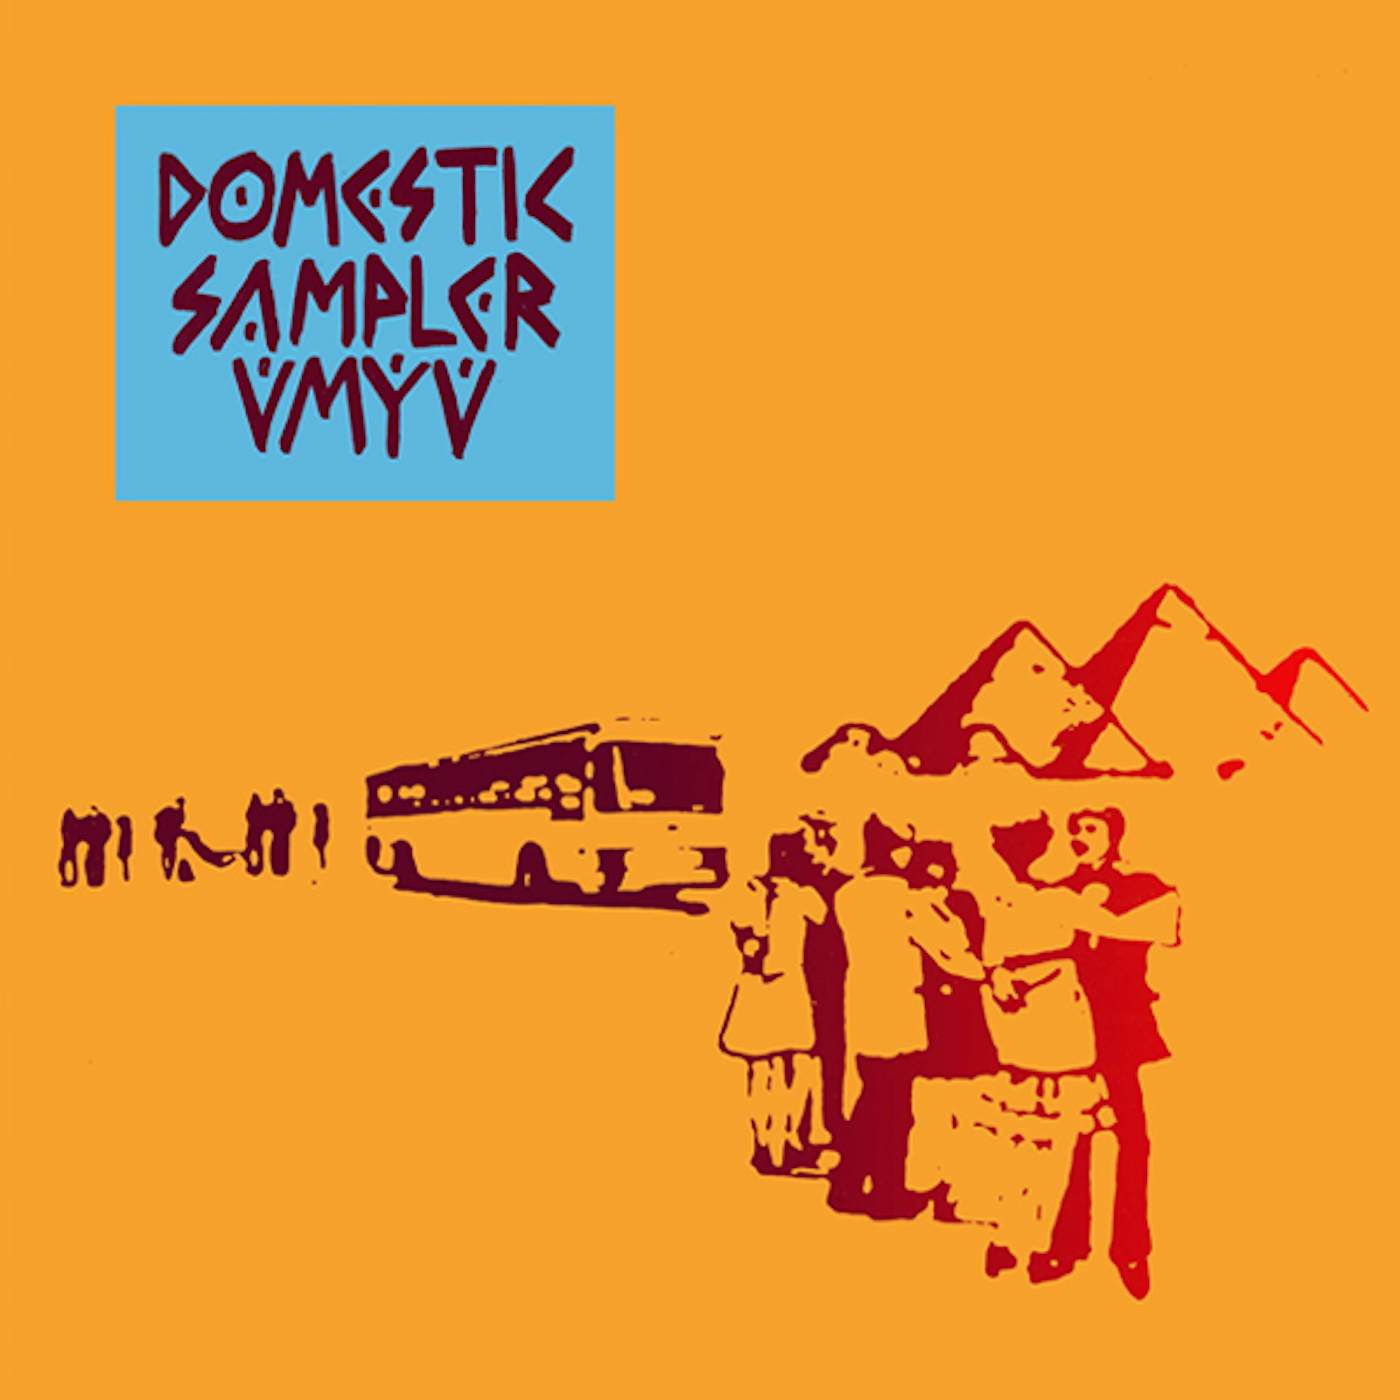 DOMESTIC SAMPLER UMYU / VARIOUS Vinyl Record